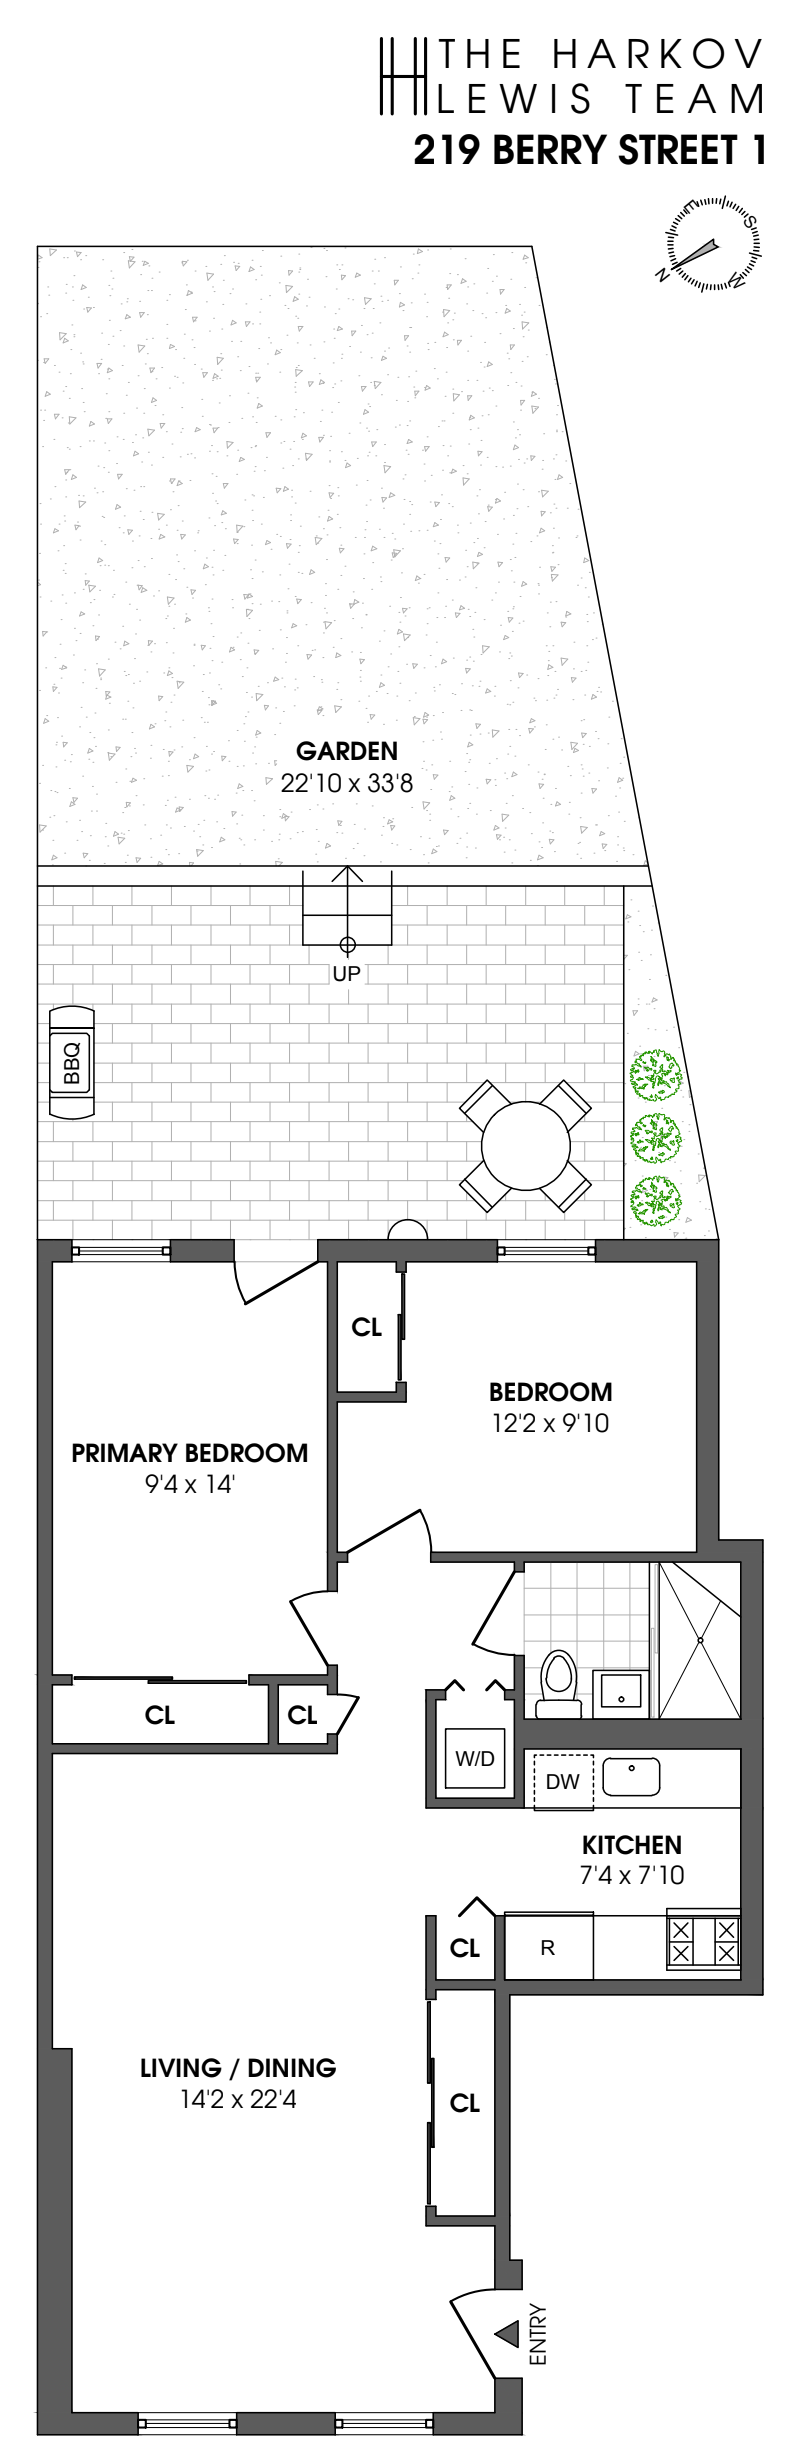 Floorplan for 219 Berry Street, 1